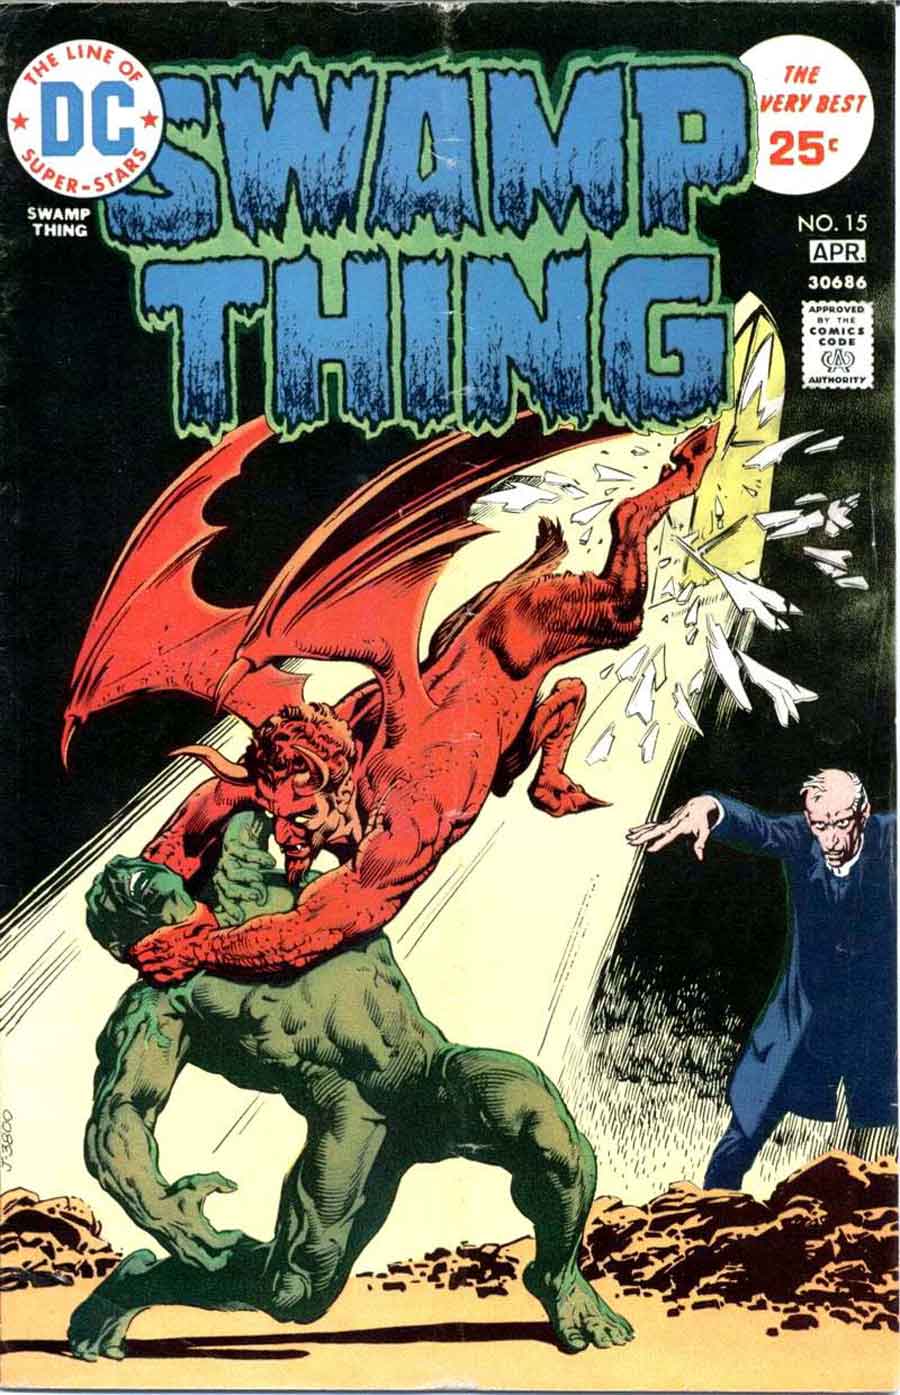 Swamp Thing v1 #15 1970s bronze age dc comic book cover art by Nestor Redondo